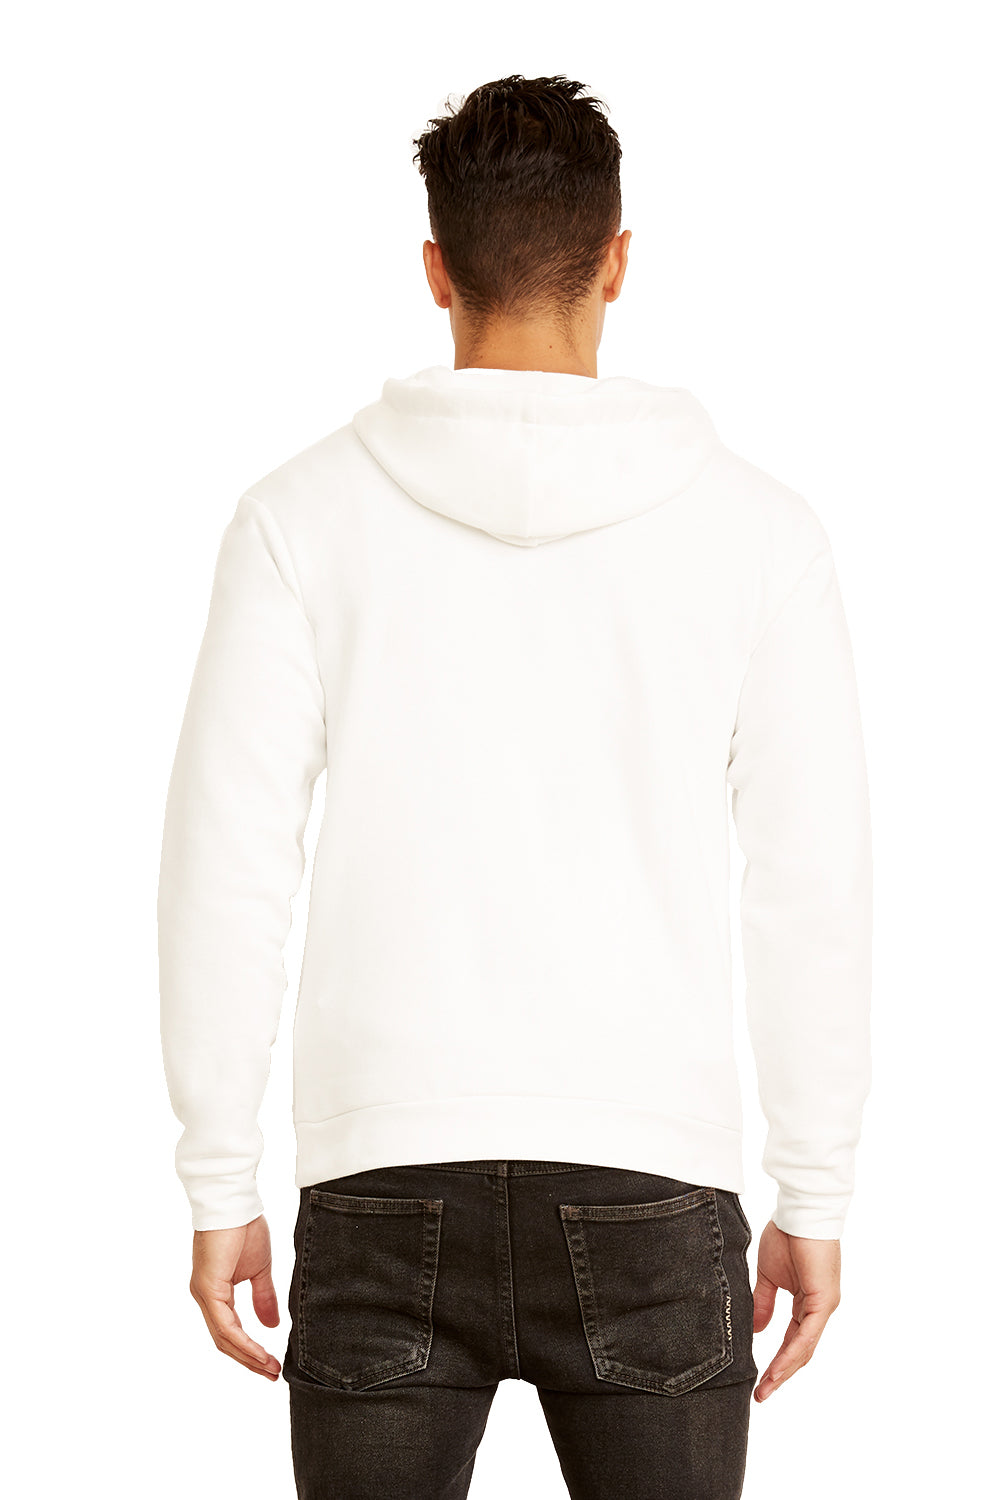 Next Level 9602 Mens Fleece Full Zip Hooded Sweatshirt Hoodie White Back